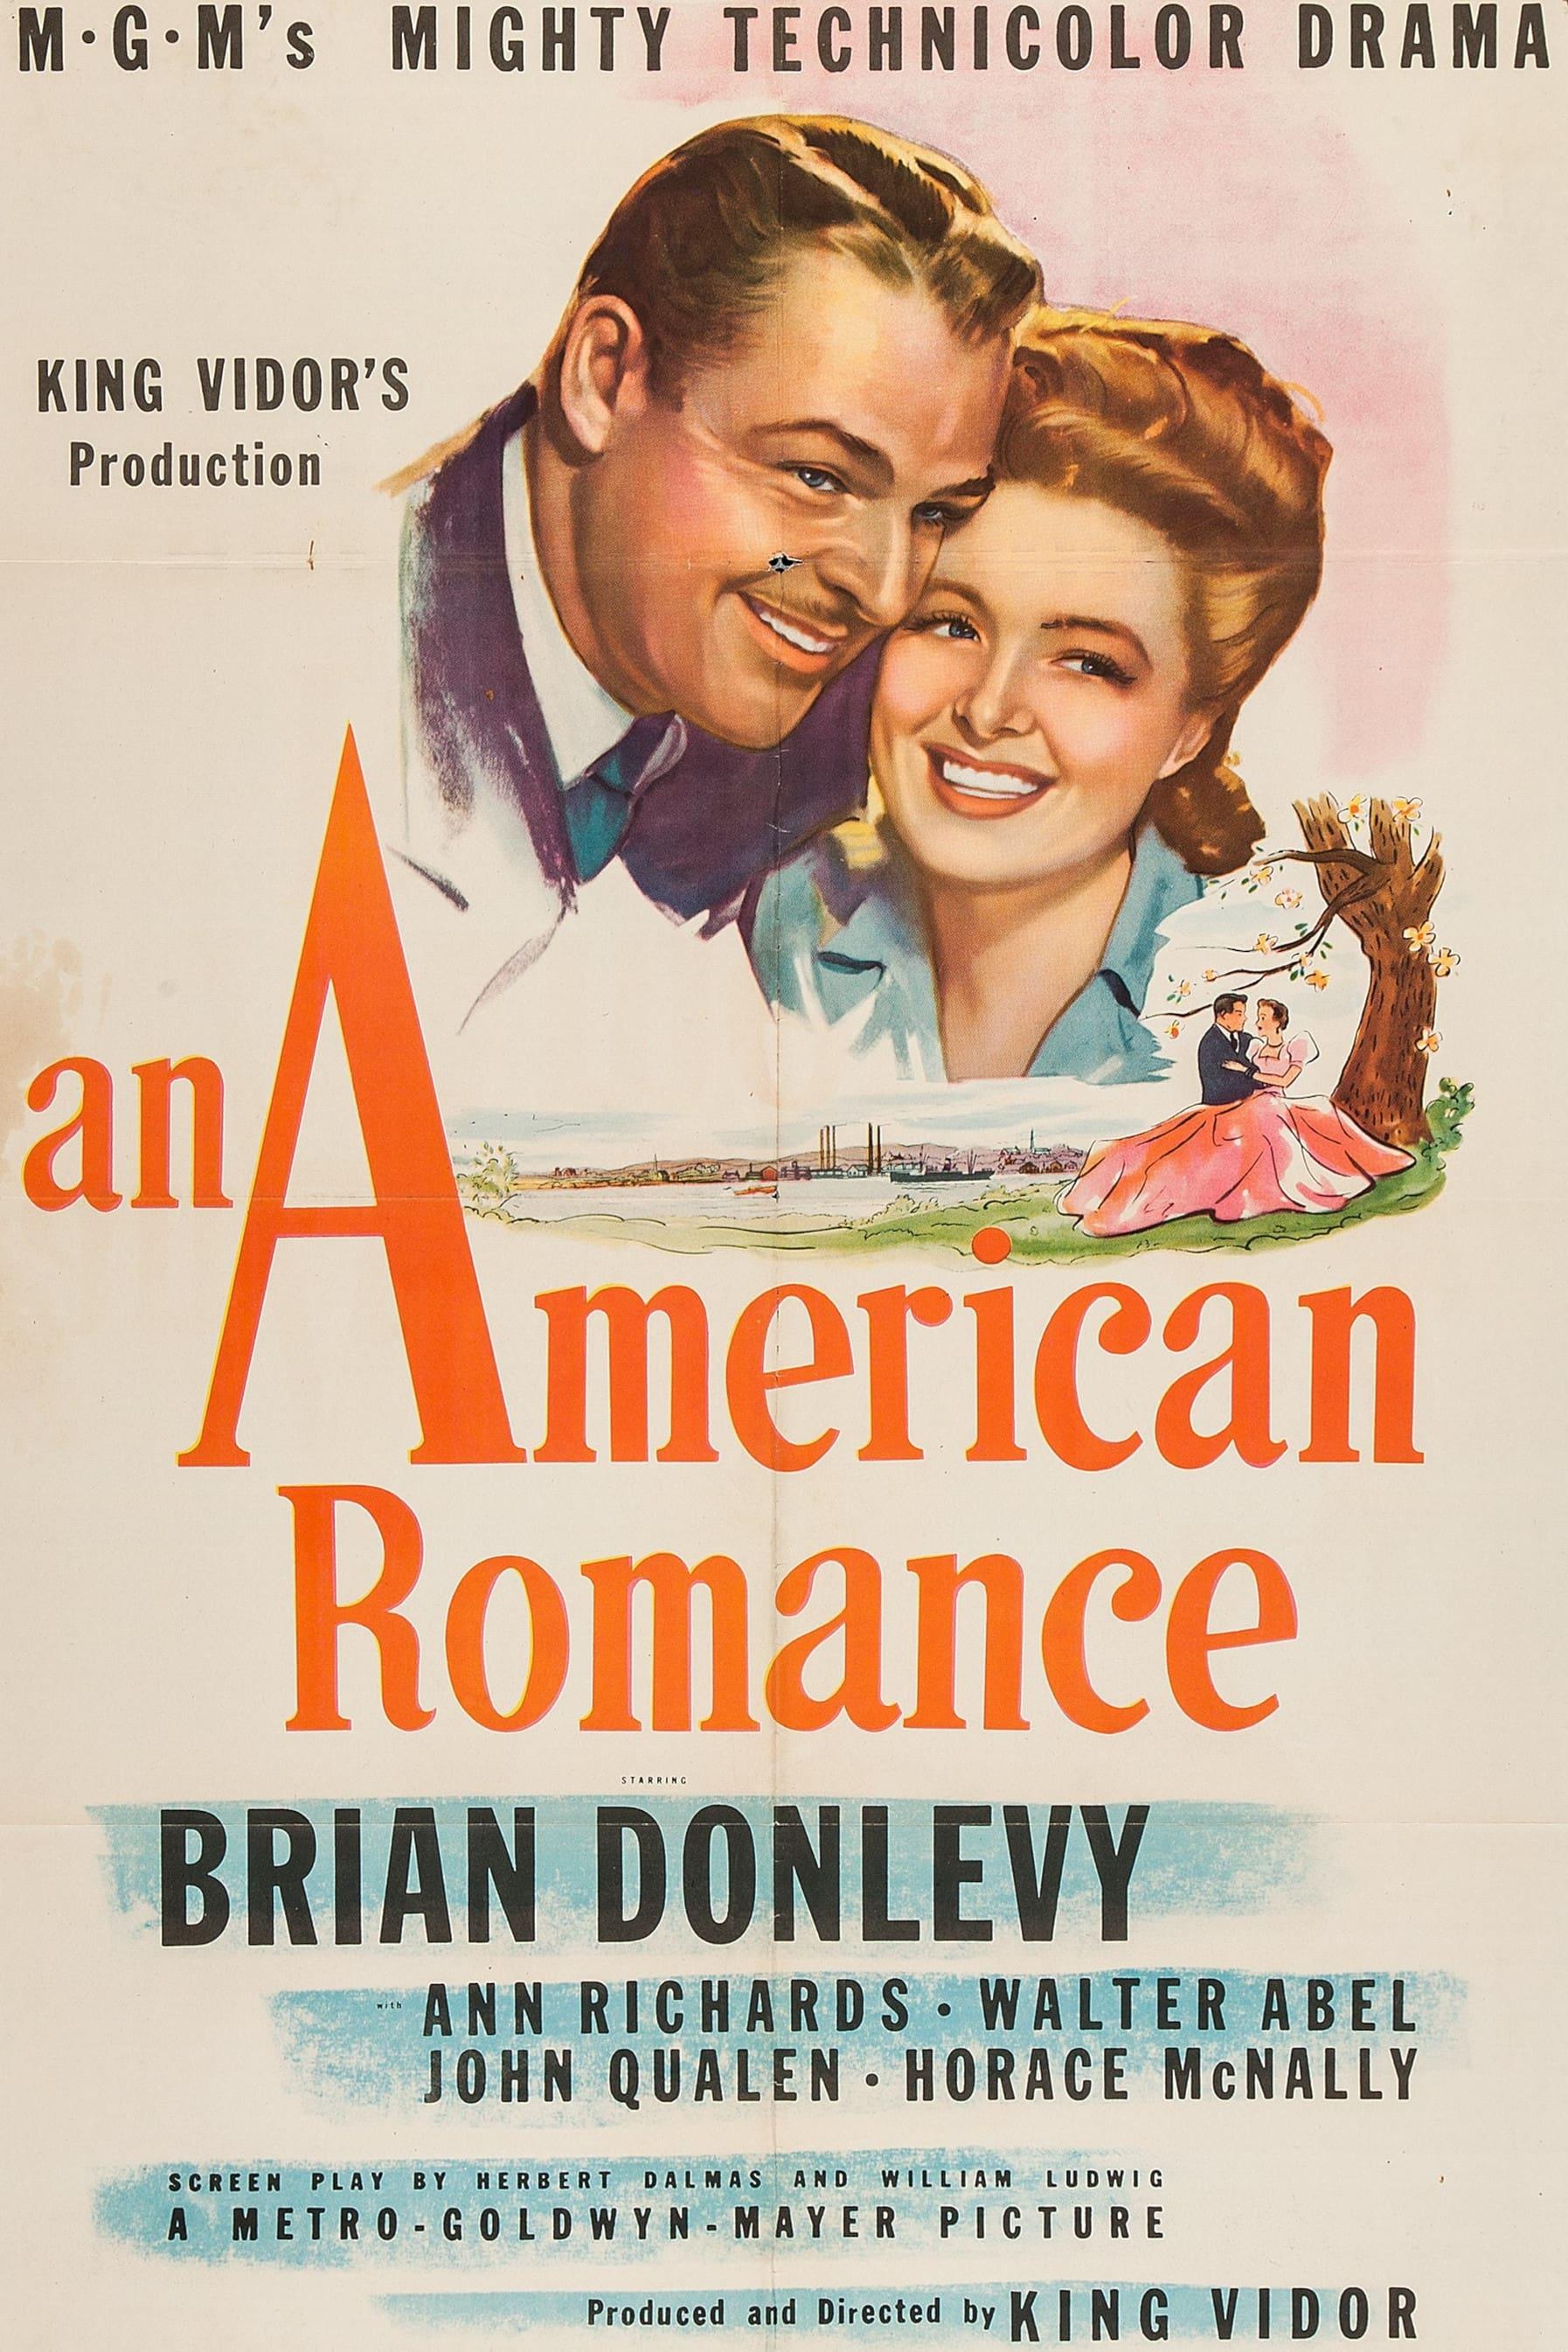 An American Romance poster